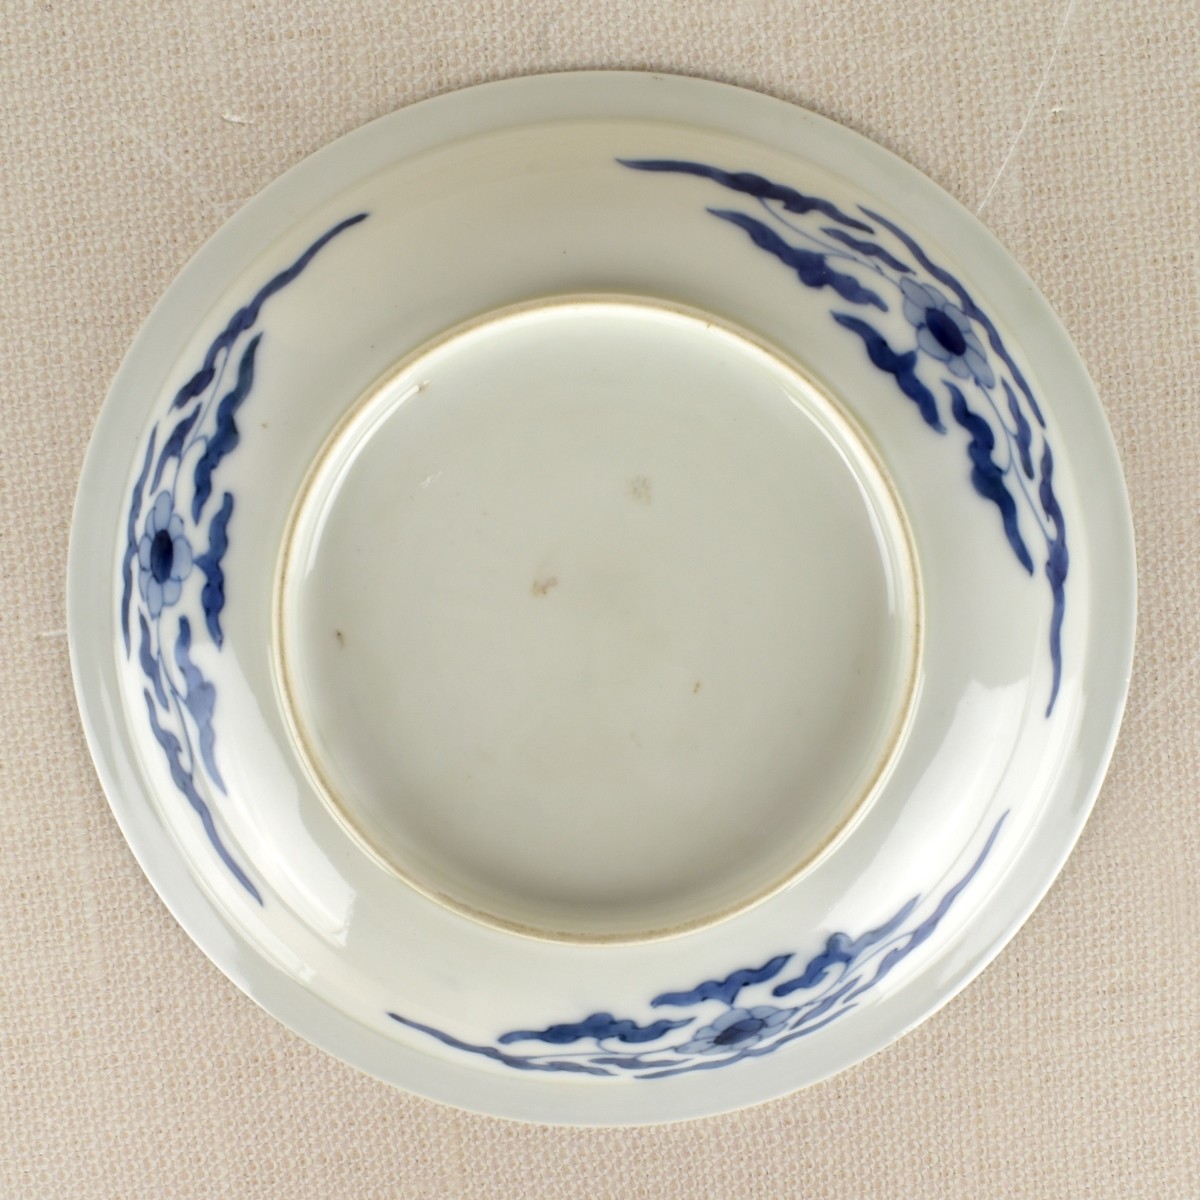 Two (2) Japanese Hirado Moriage Plates